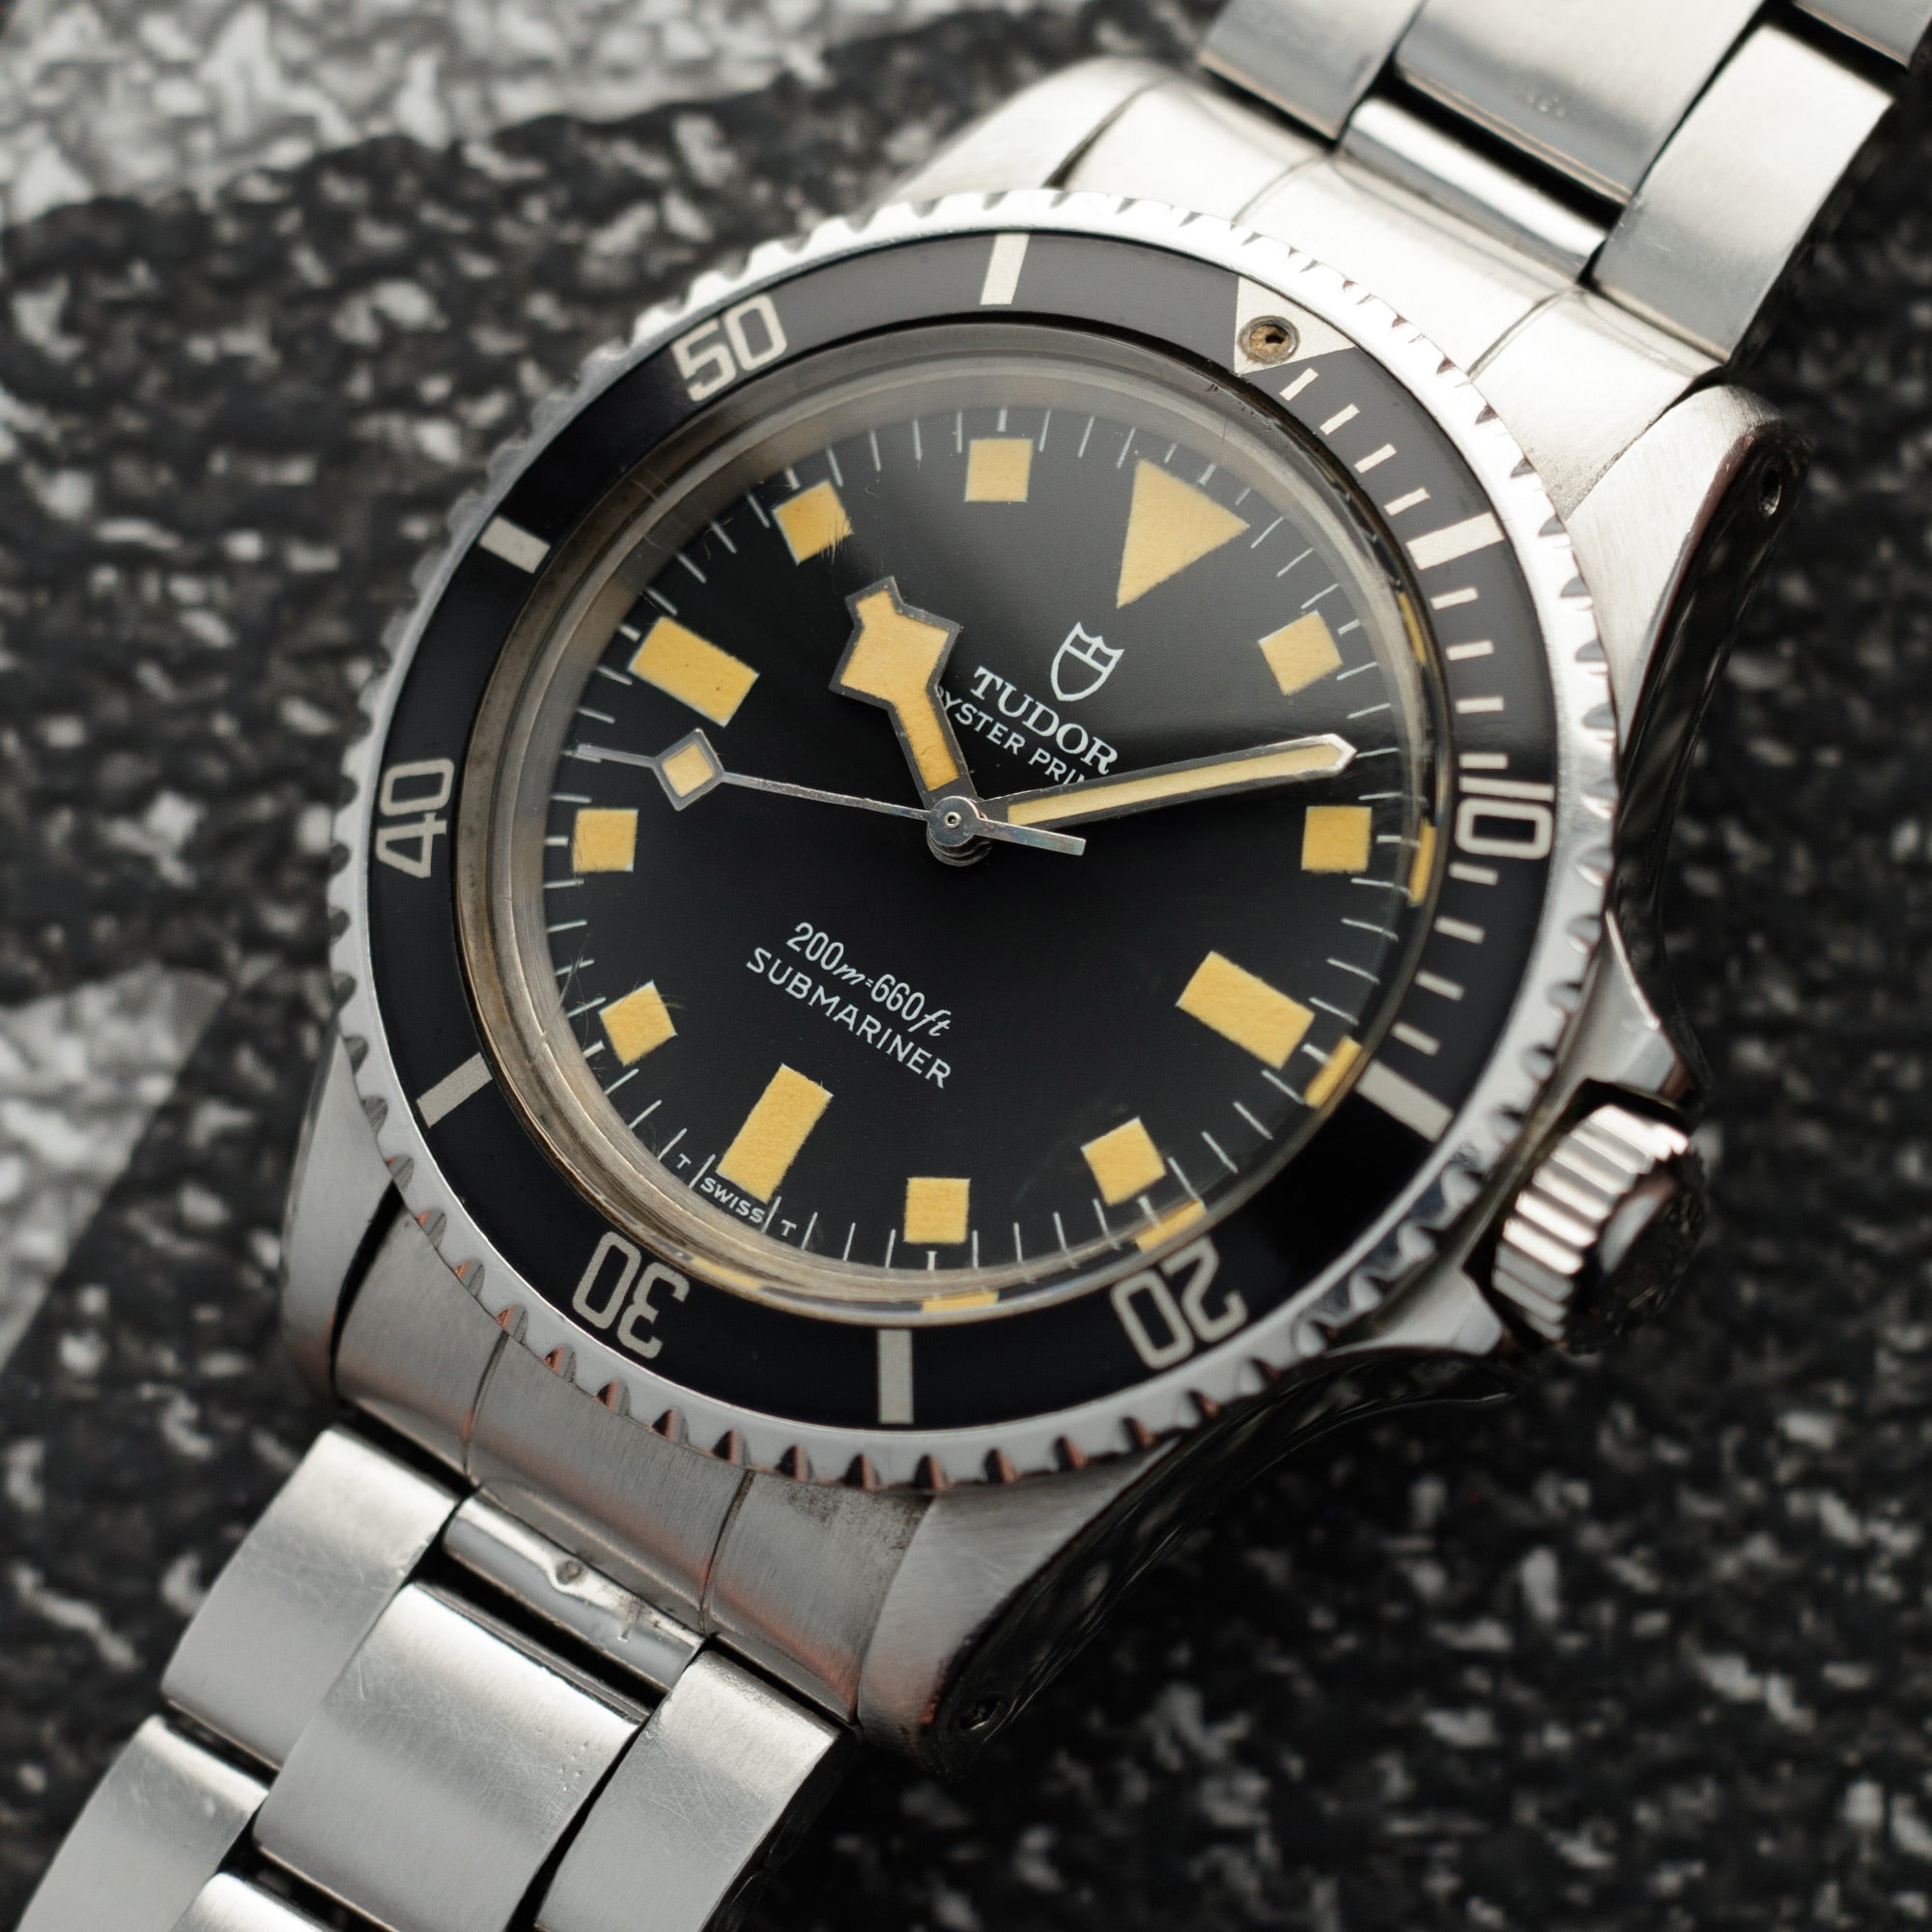 Featured Watch: Tudor Submariner Ref. 9401